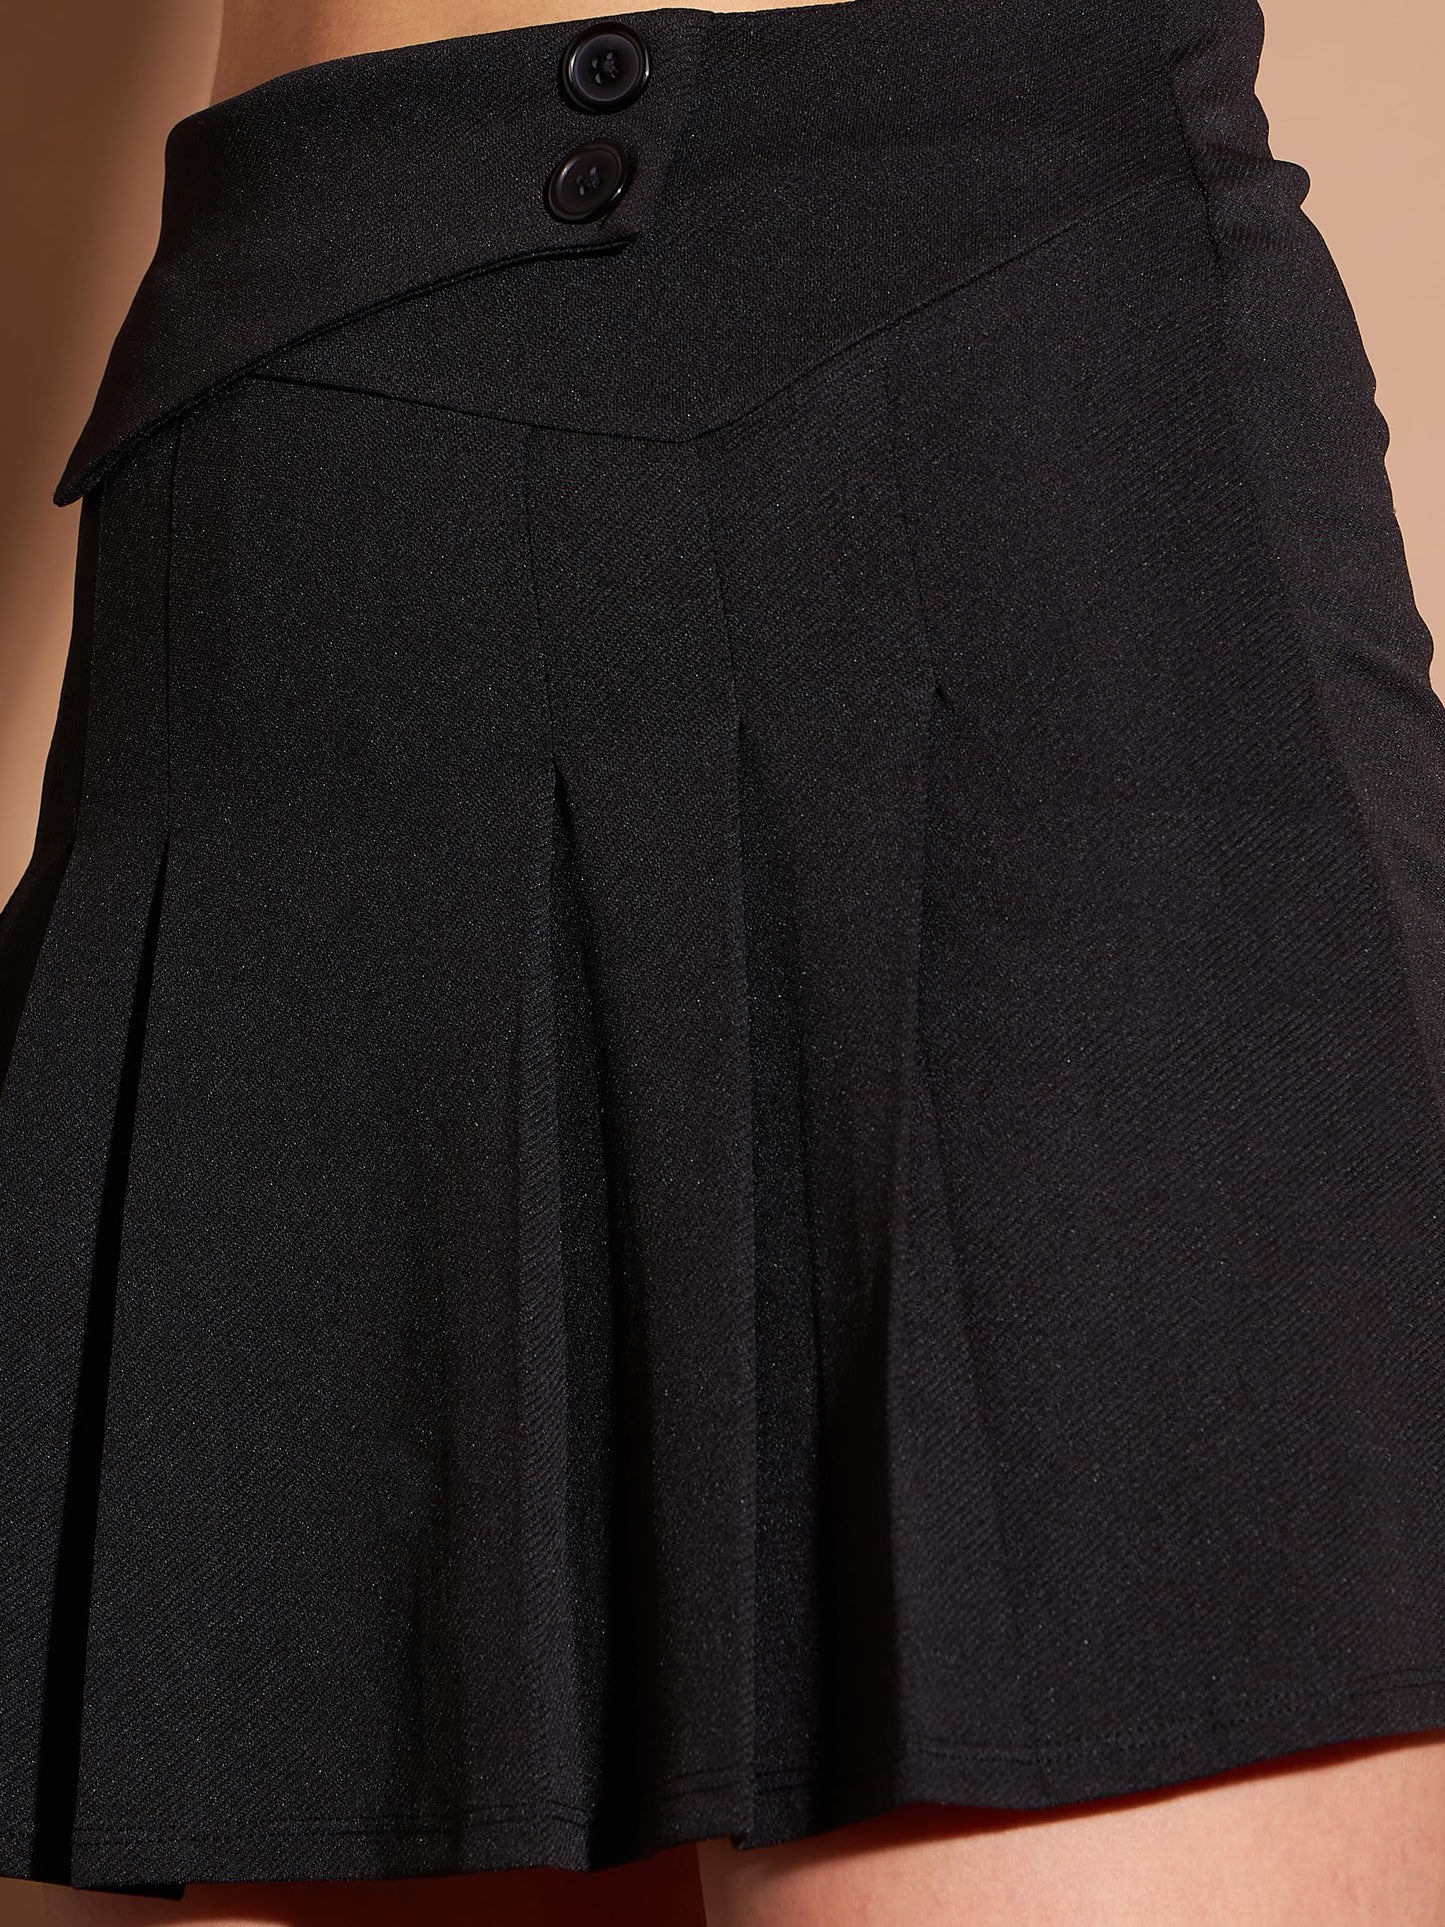 Marie Claire Spandex Western Skirt Black